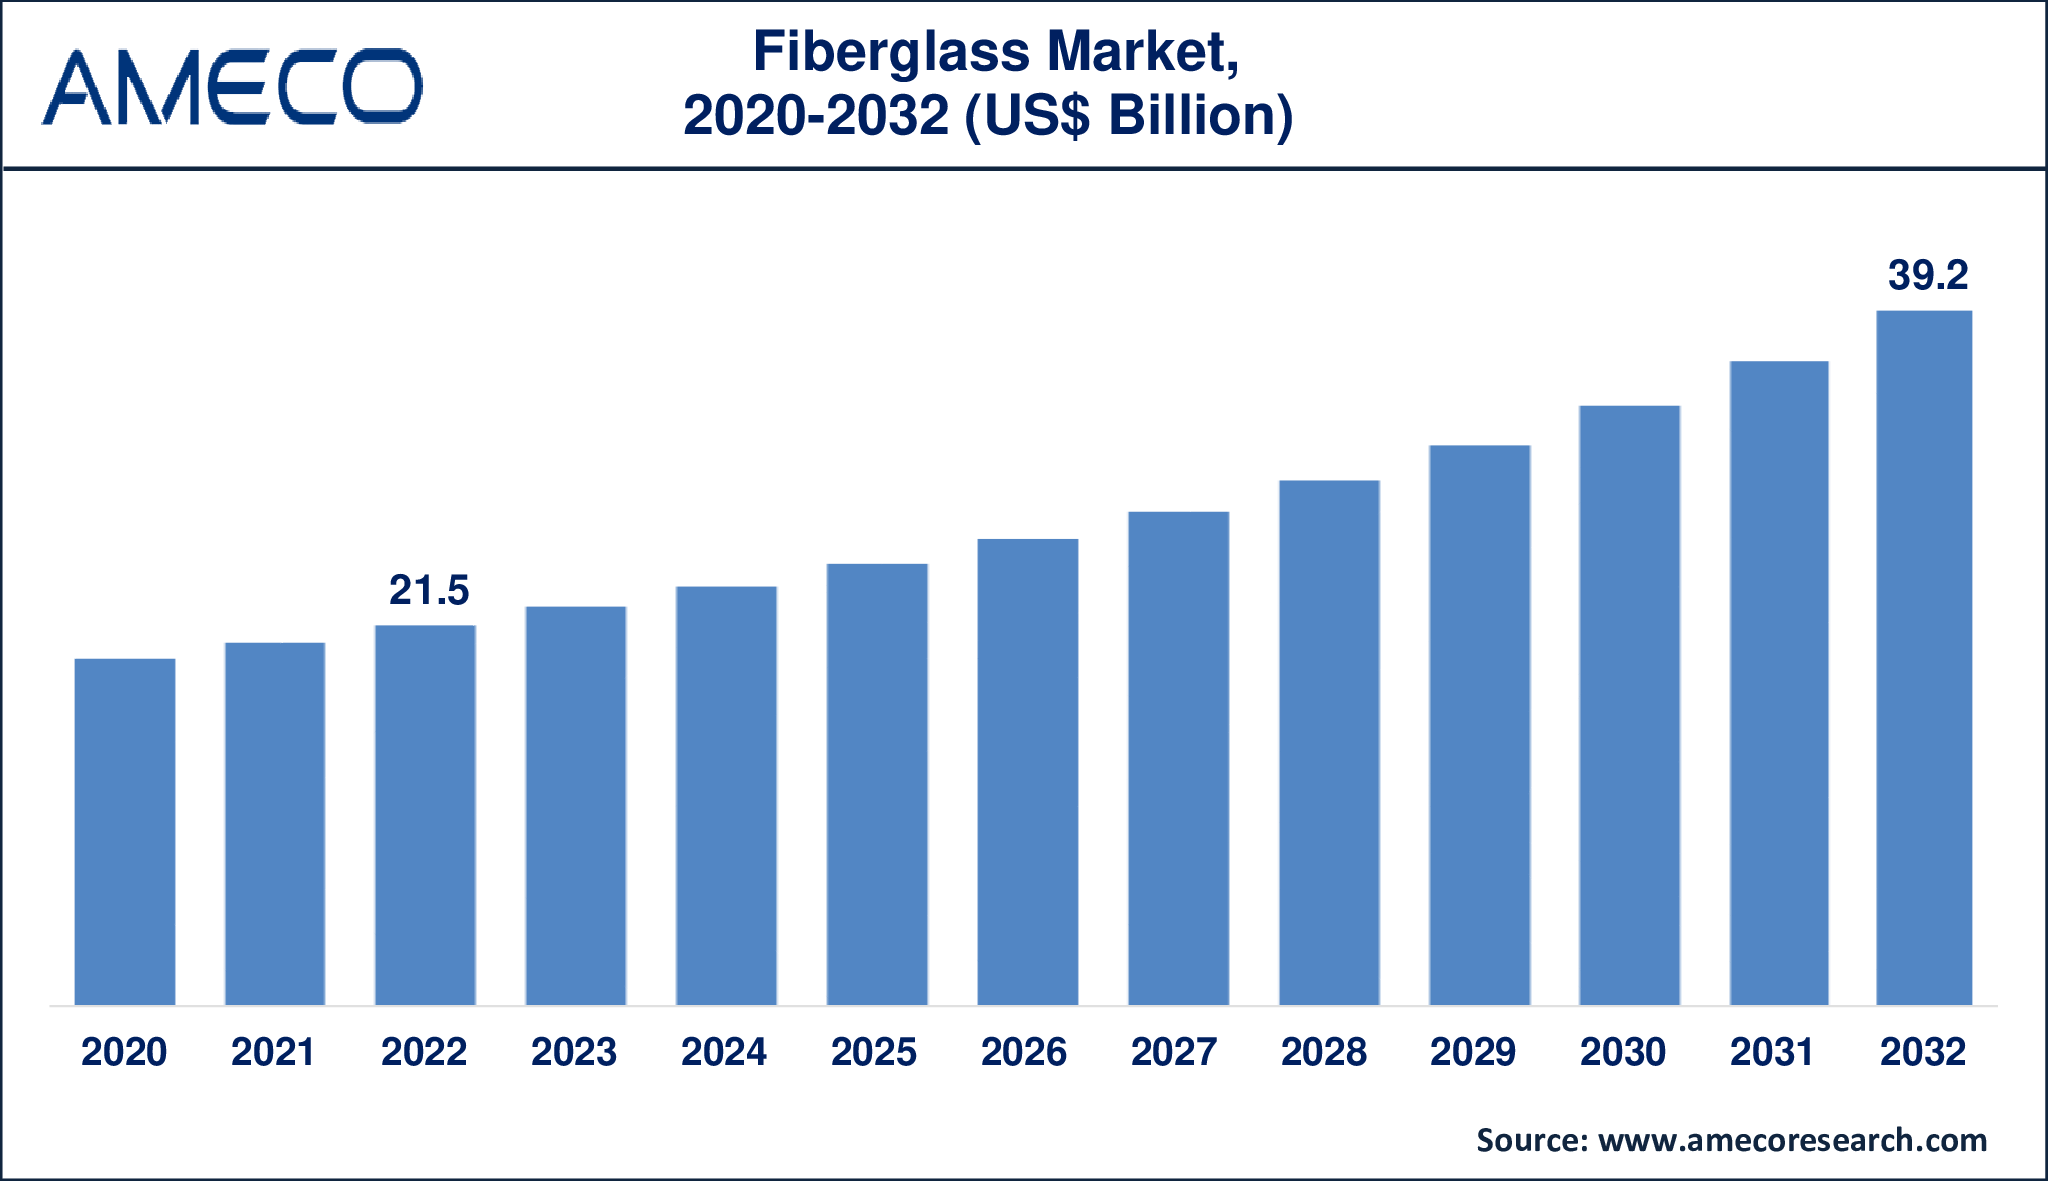 Fiberglass Market Dynamics